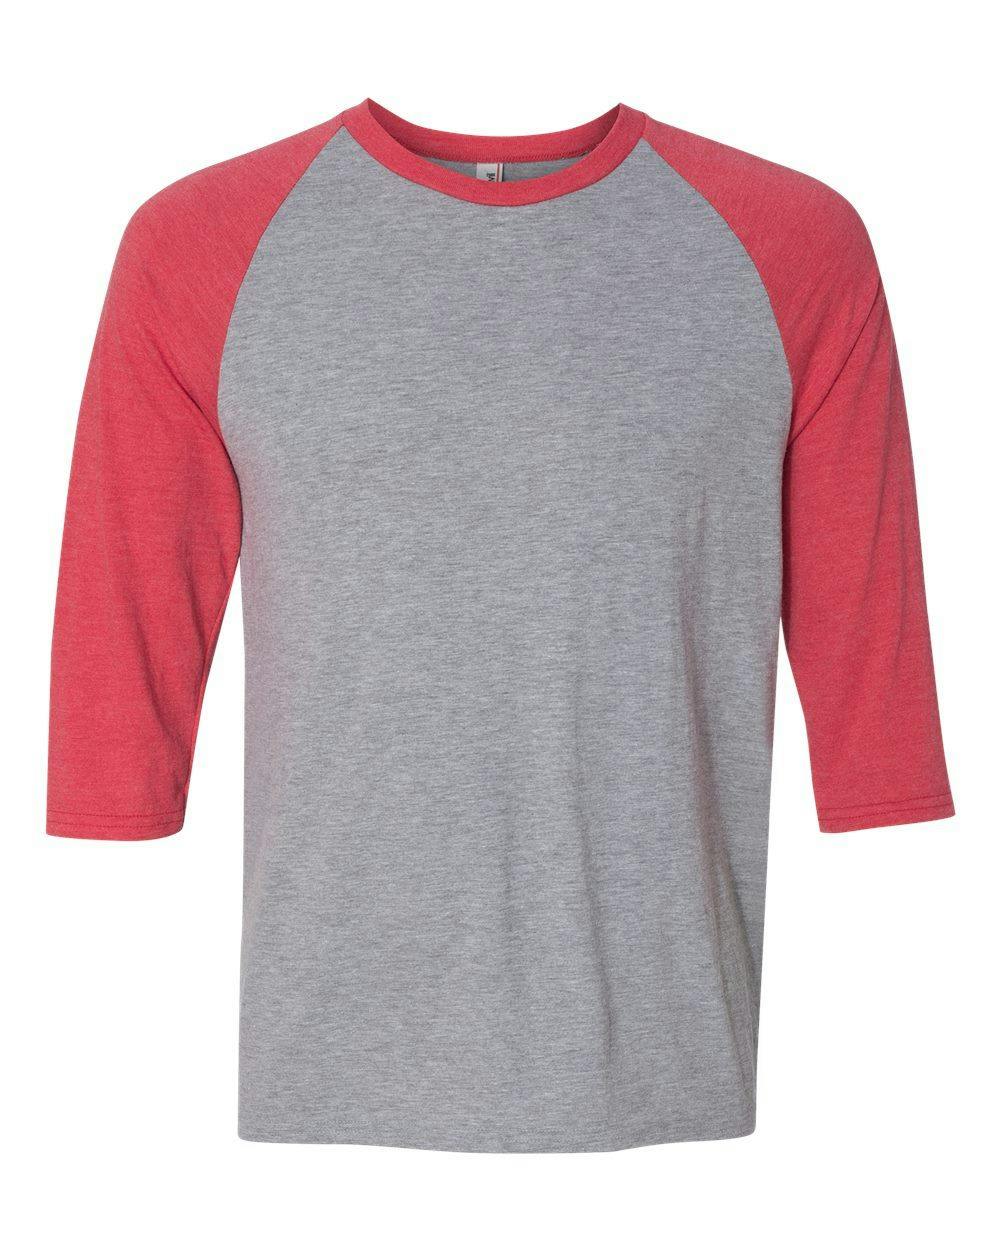 Image for Triblend Raglan Three-Quarter Sleeve T-Shirt - 6755